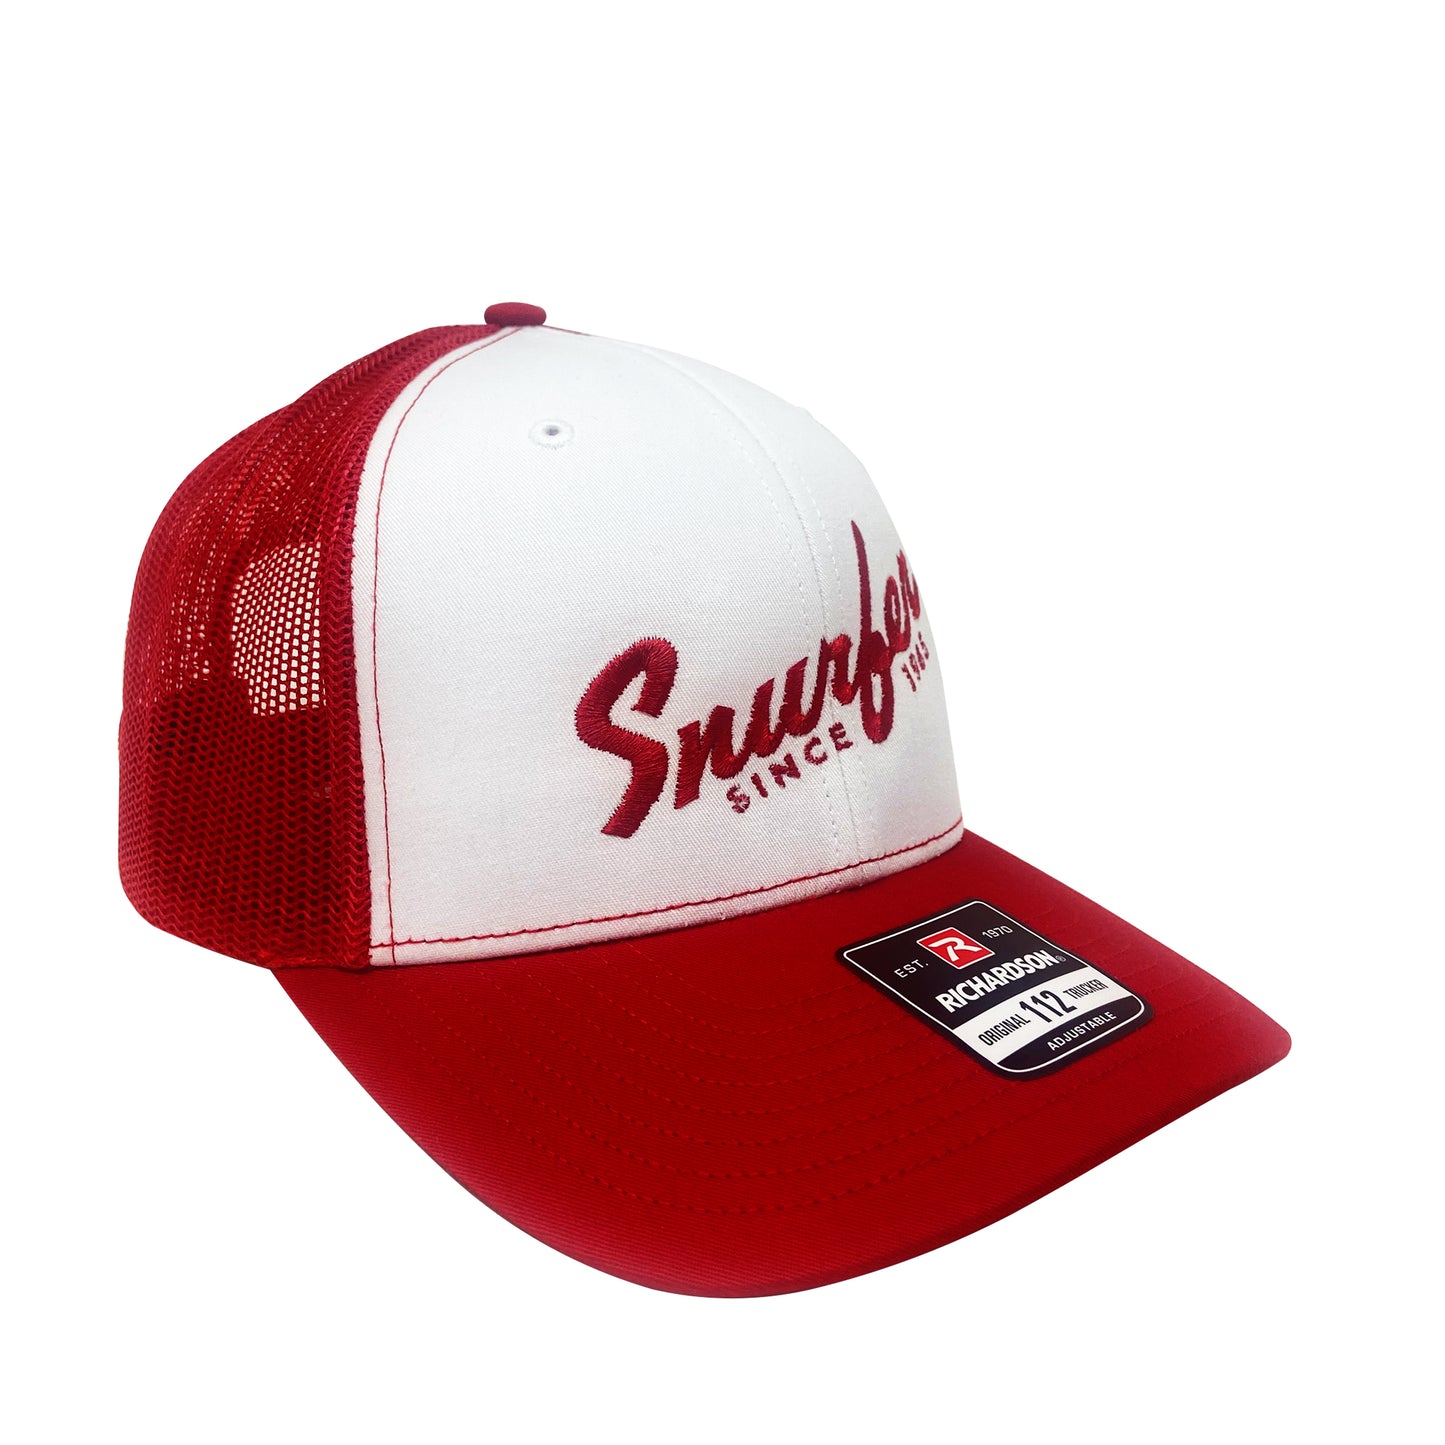 Snurfer Hat